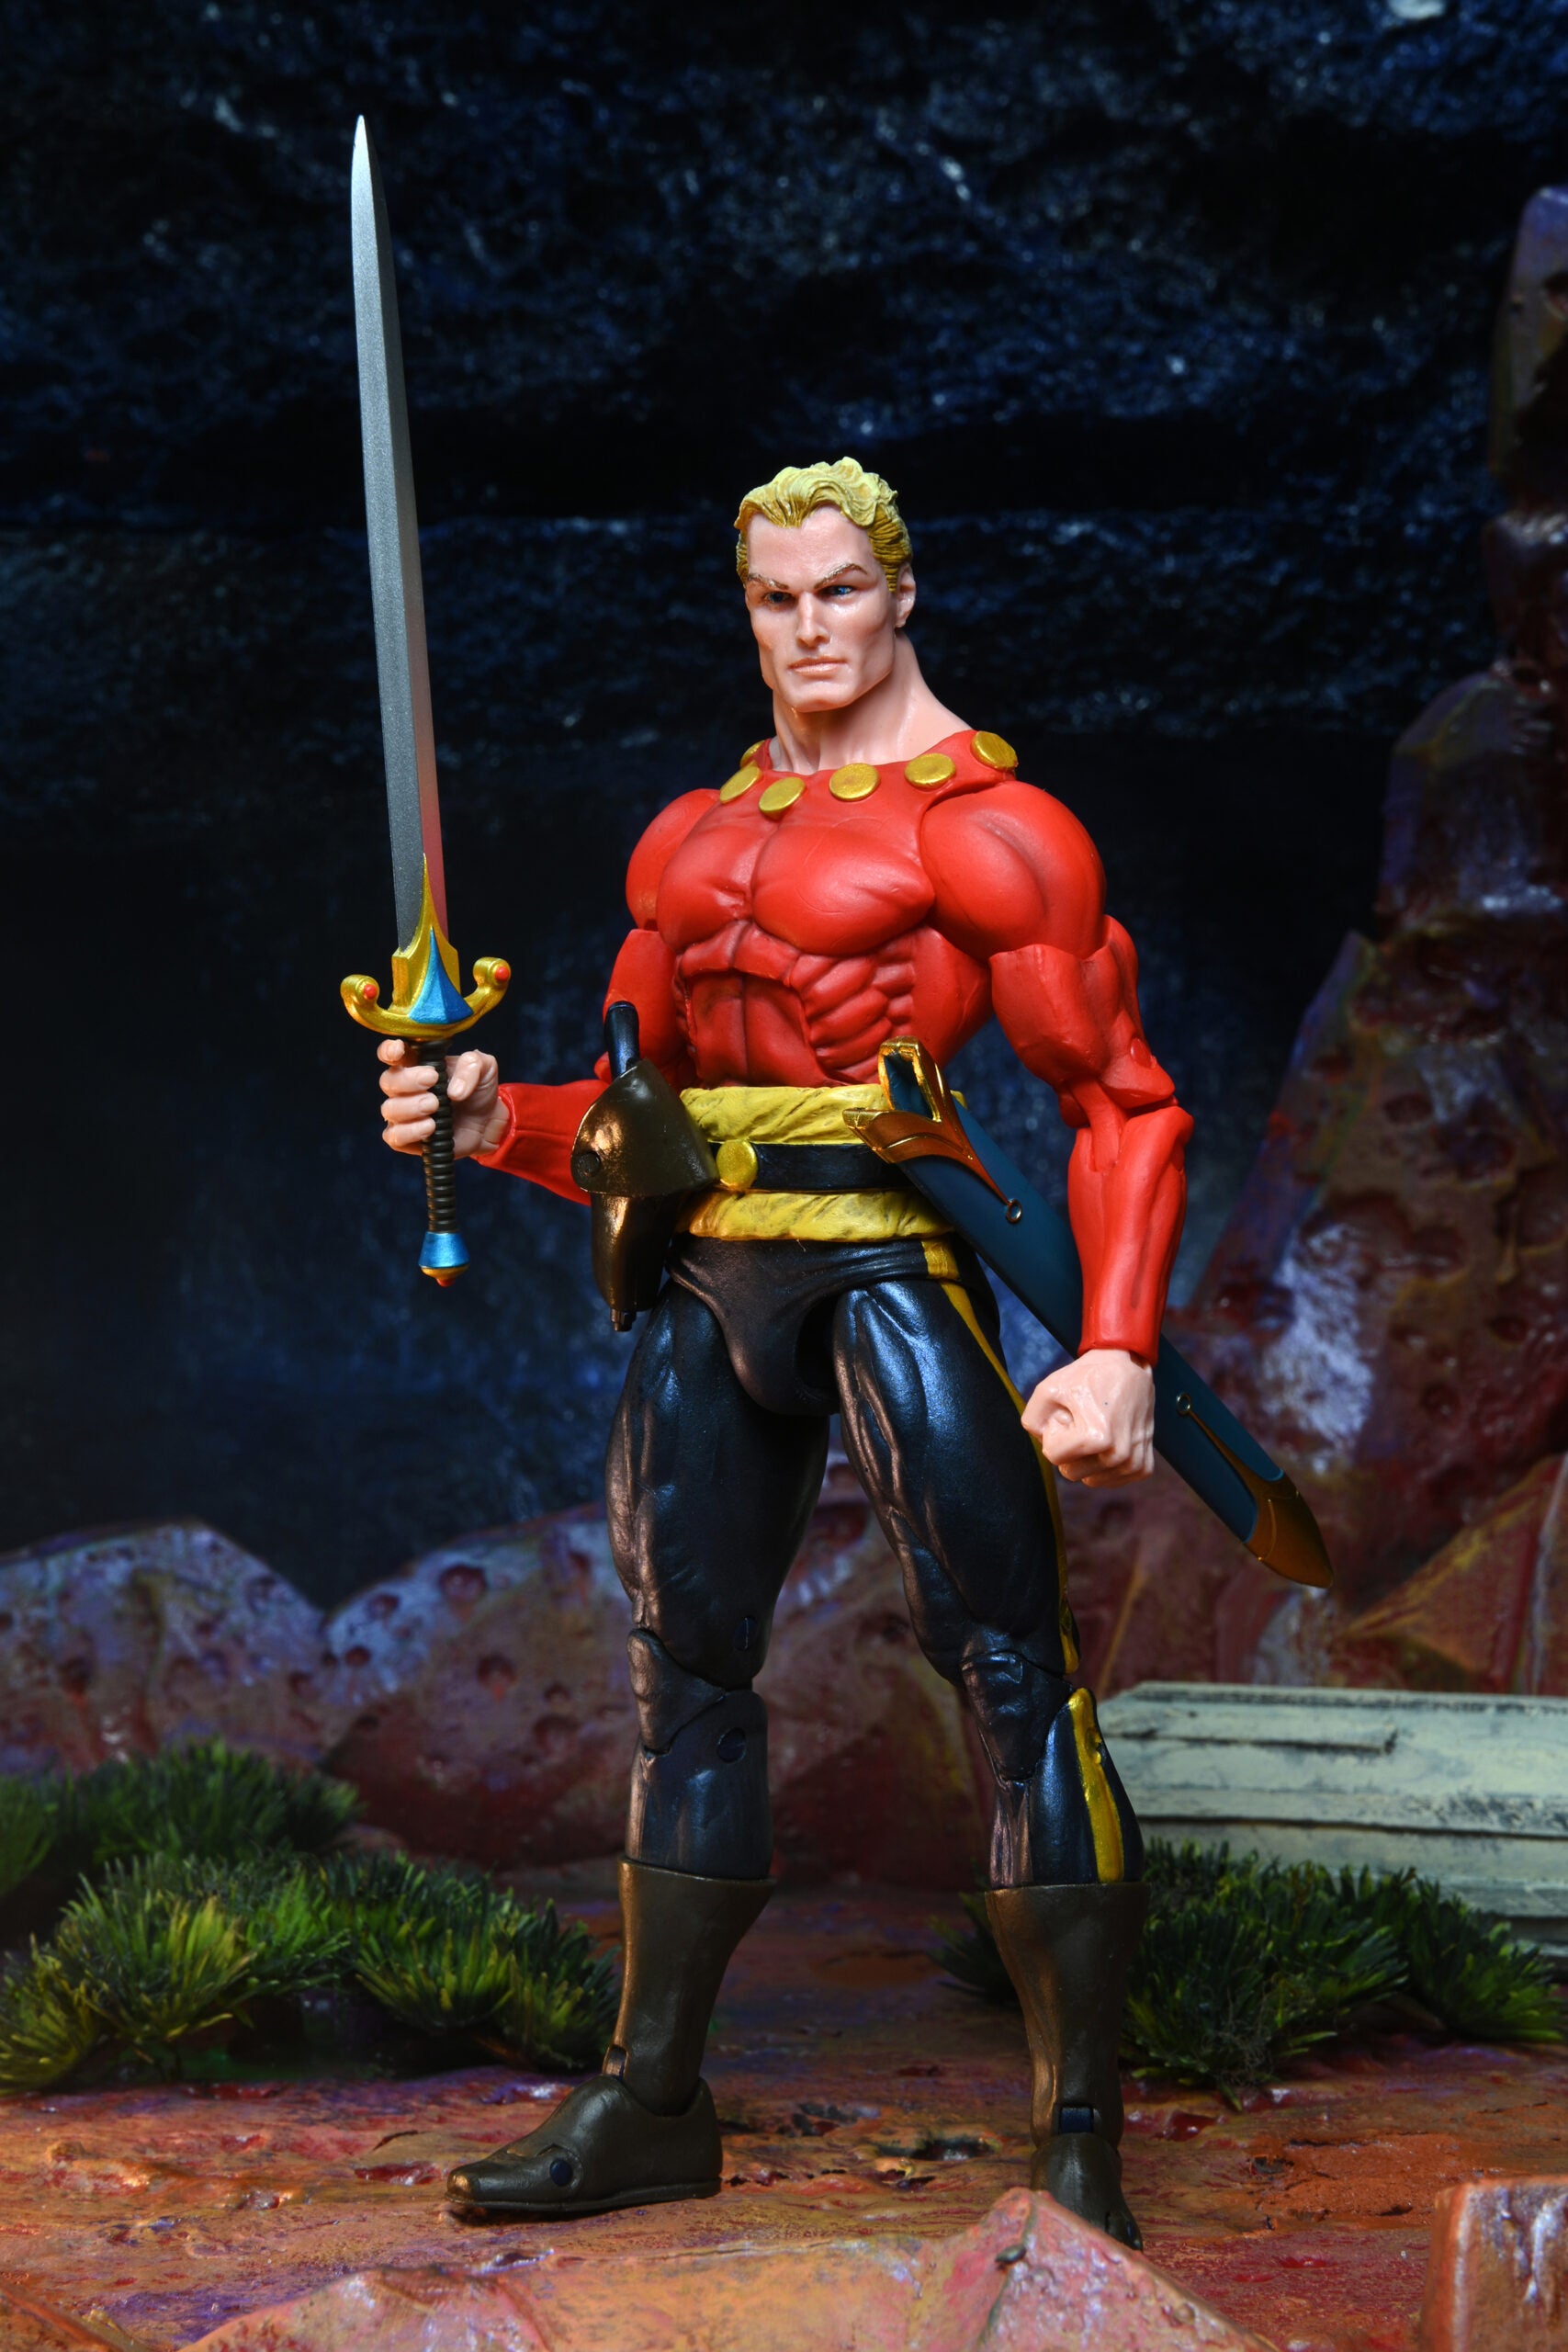 King Features Flash Gordon Ultimate Flash Gordon (Final Battle)